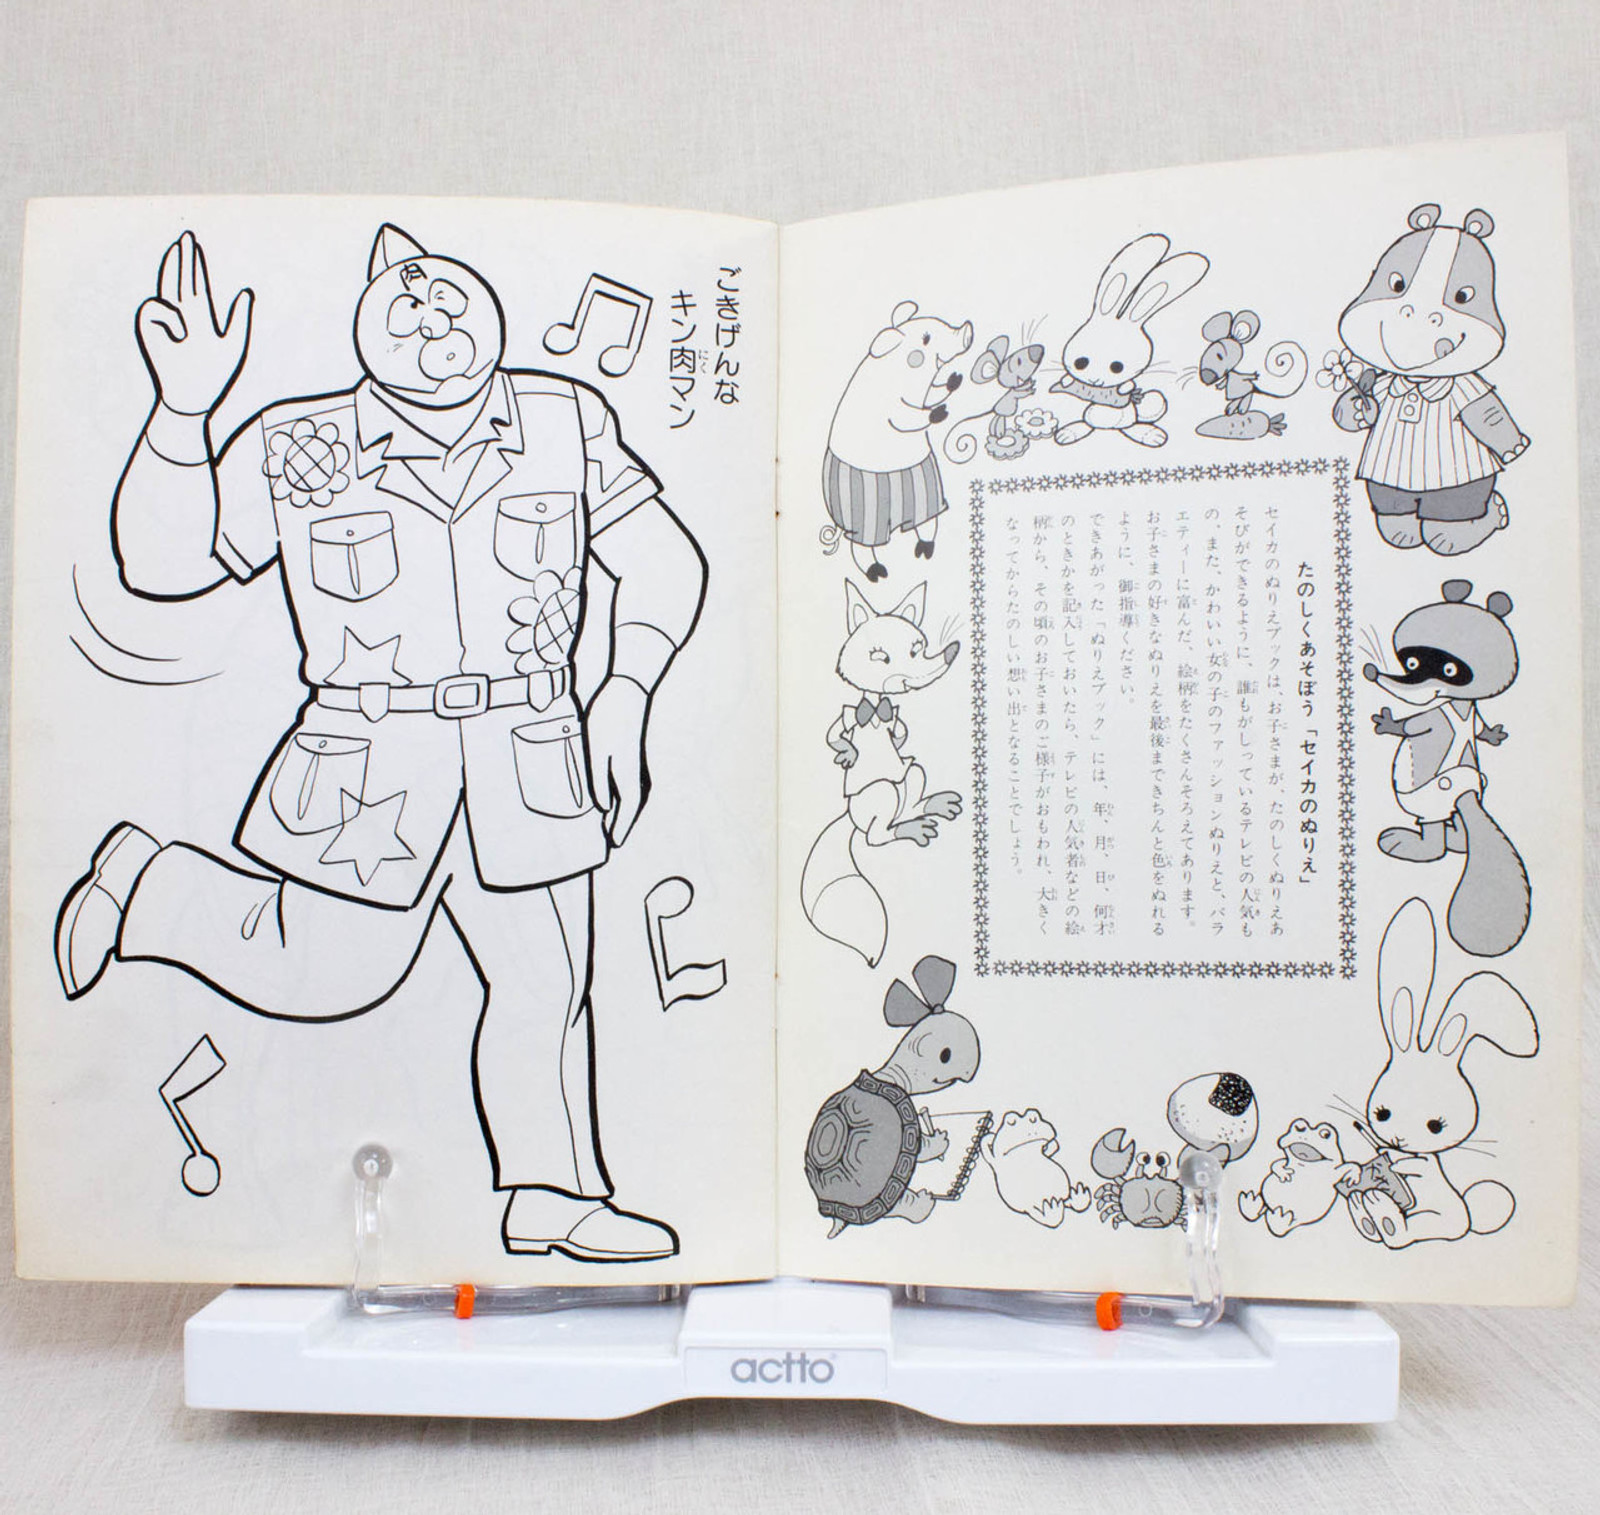 Retro Kinnikuman Line Drawing for Coloring‐in Book Ultimate Muscle JAPAN ANIME